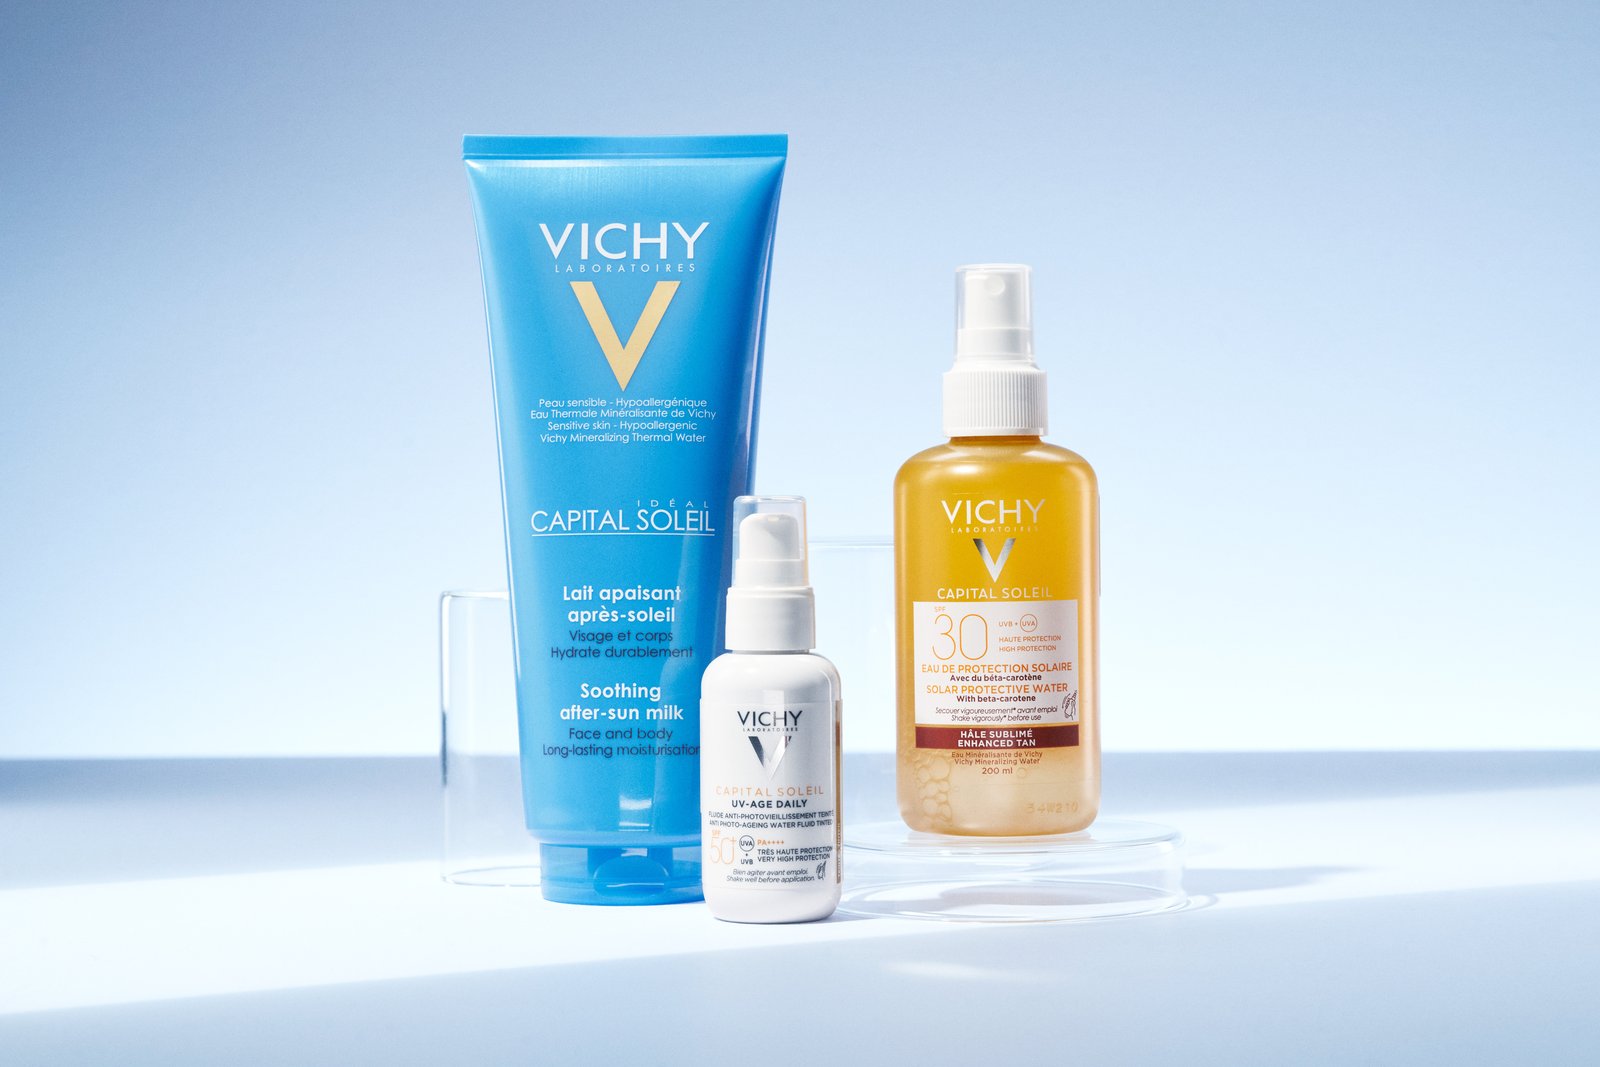 Vichy Capital Soleil UV-Age Daily Tinted SPF50+ 40 ml